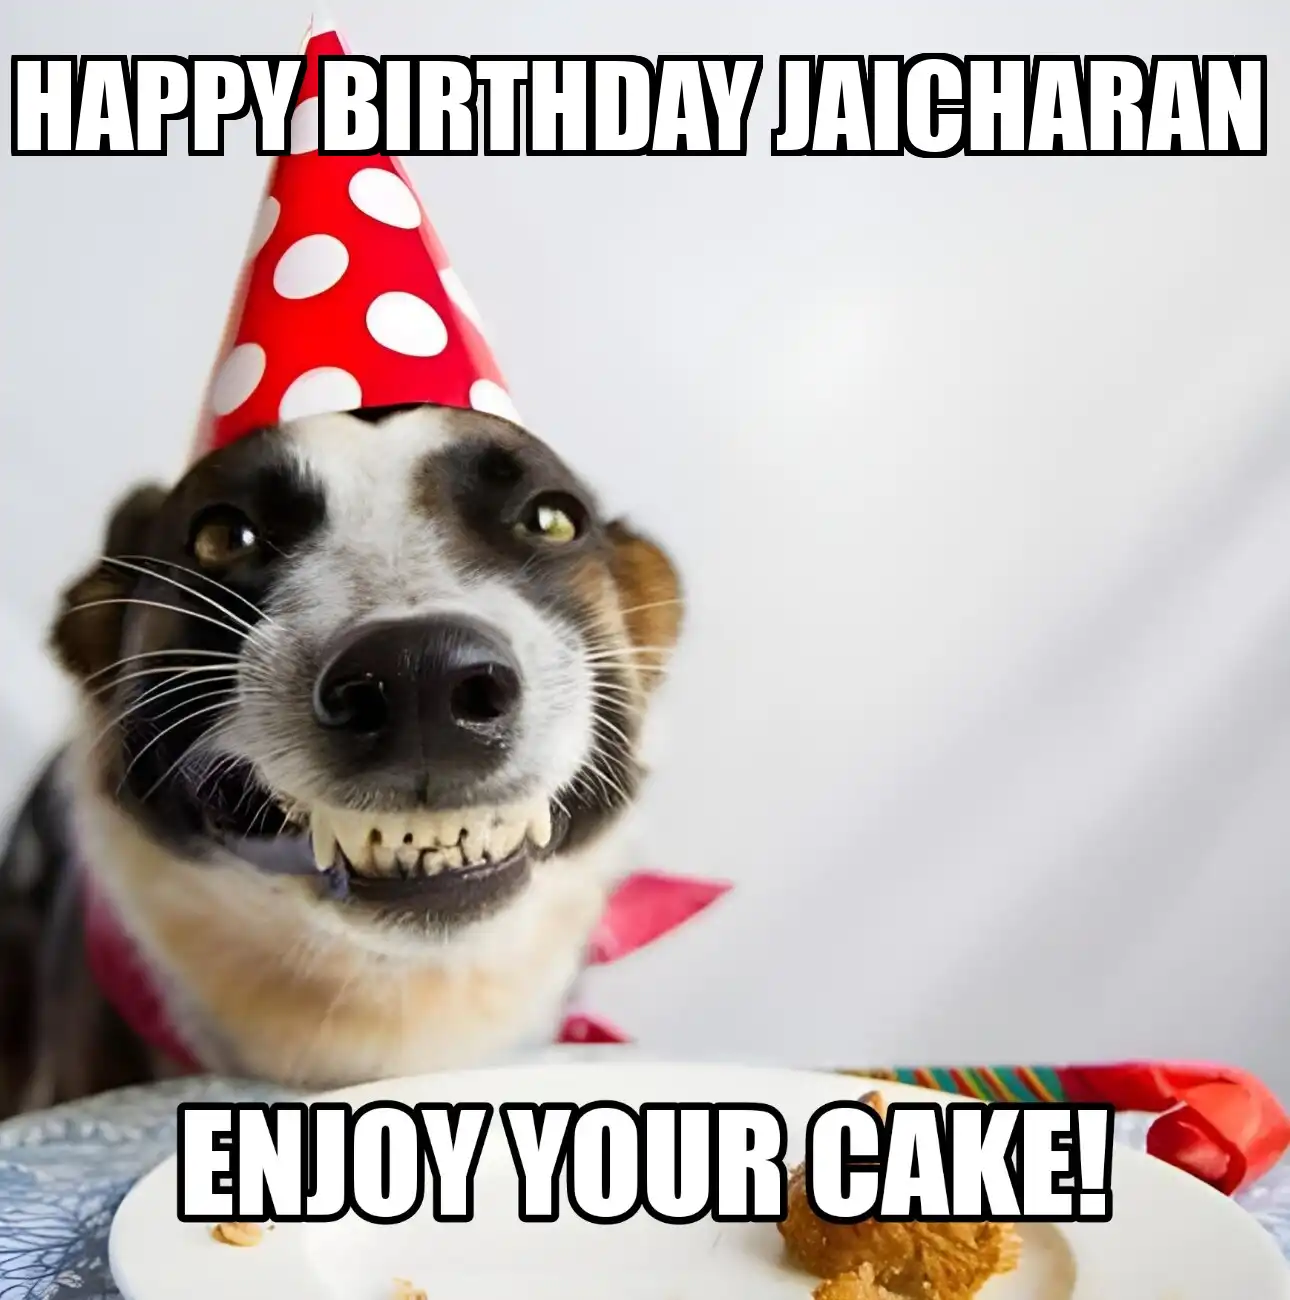 Happy Birthday Jaicharan Enjoy Your Cake Dog Meme